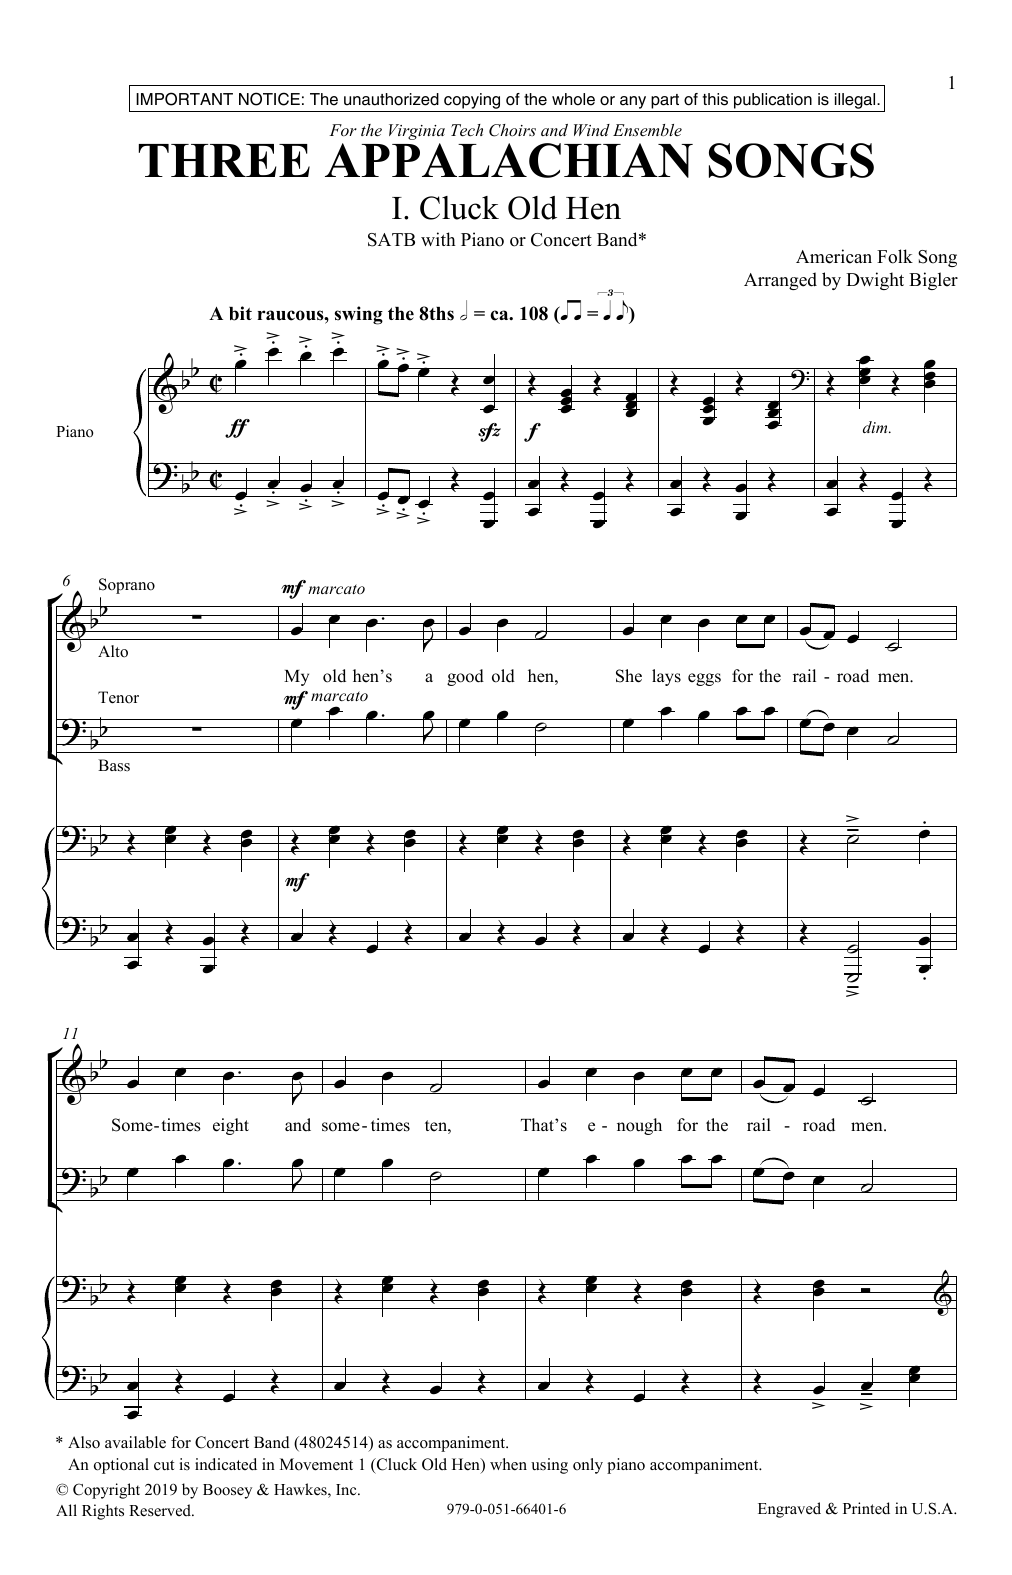 Dwight Bigler Three Appalachian Songs Sheet Music Notes & Chords for SATB Choir - Download or Print PDF